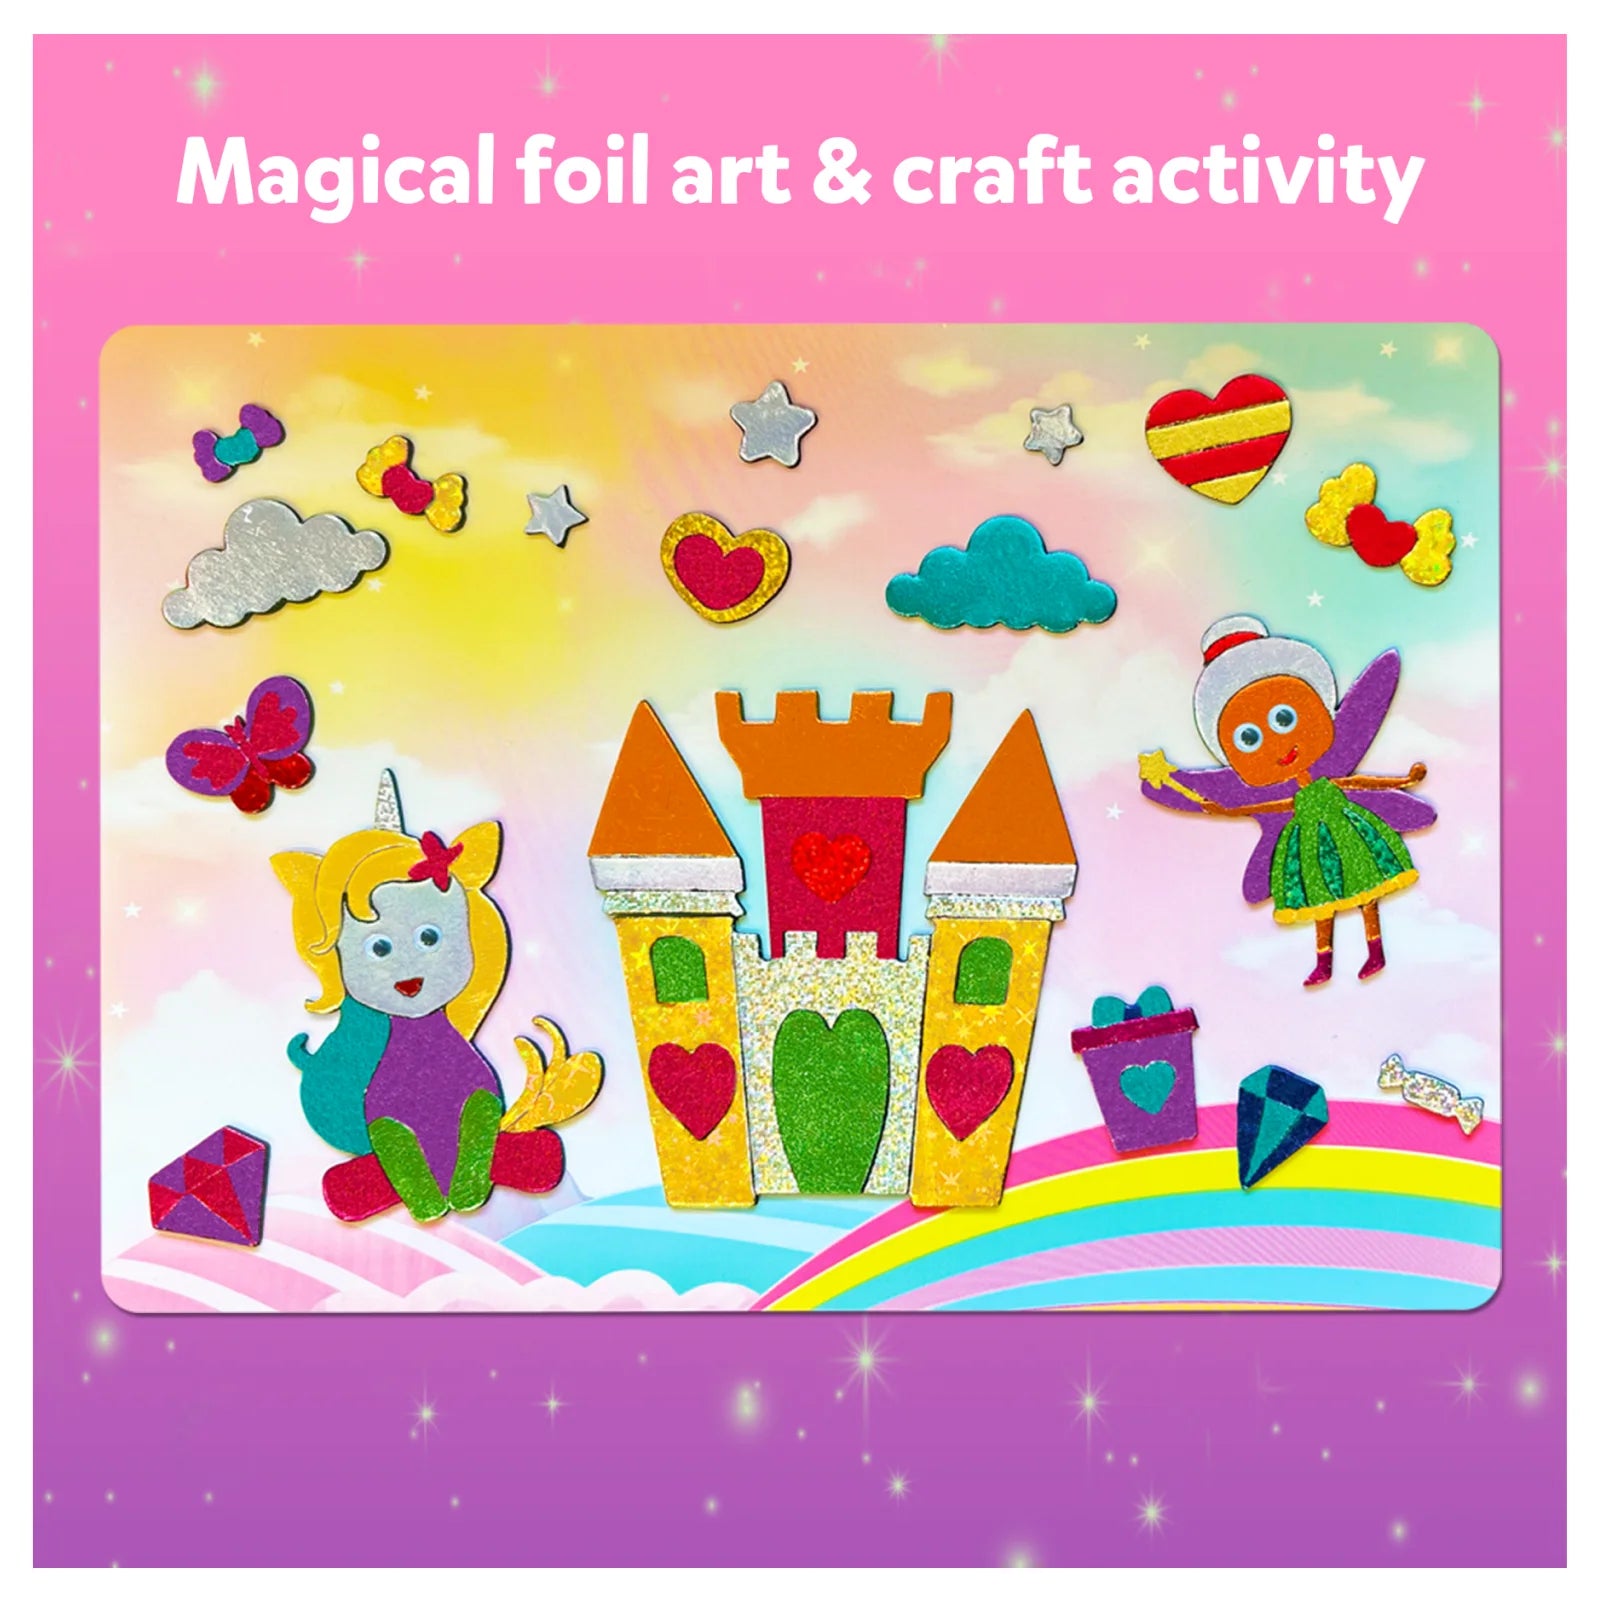 Foil Fun: Unicorn & Princess  No Mess Art Kit (ages 4-9) – Skillmatics